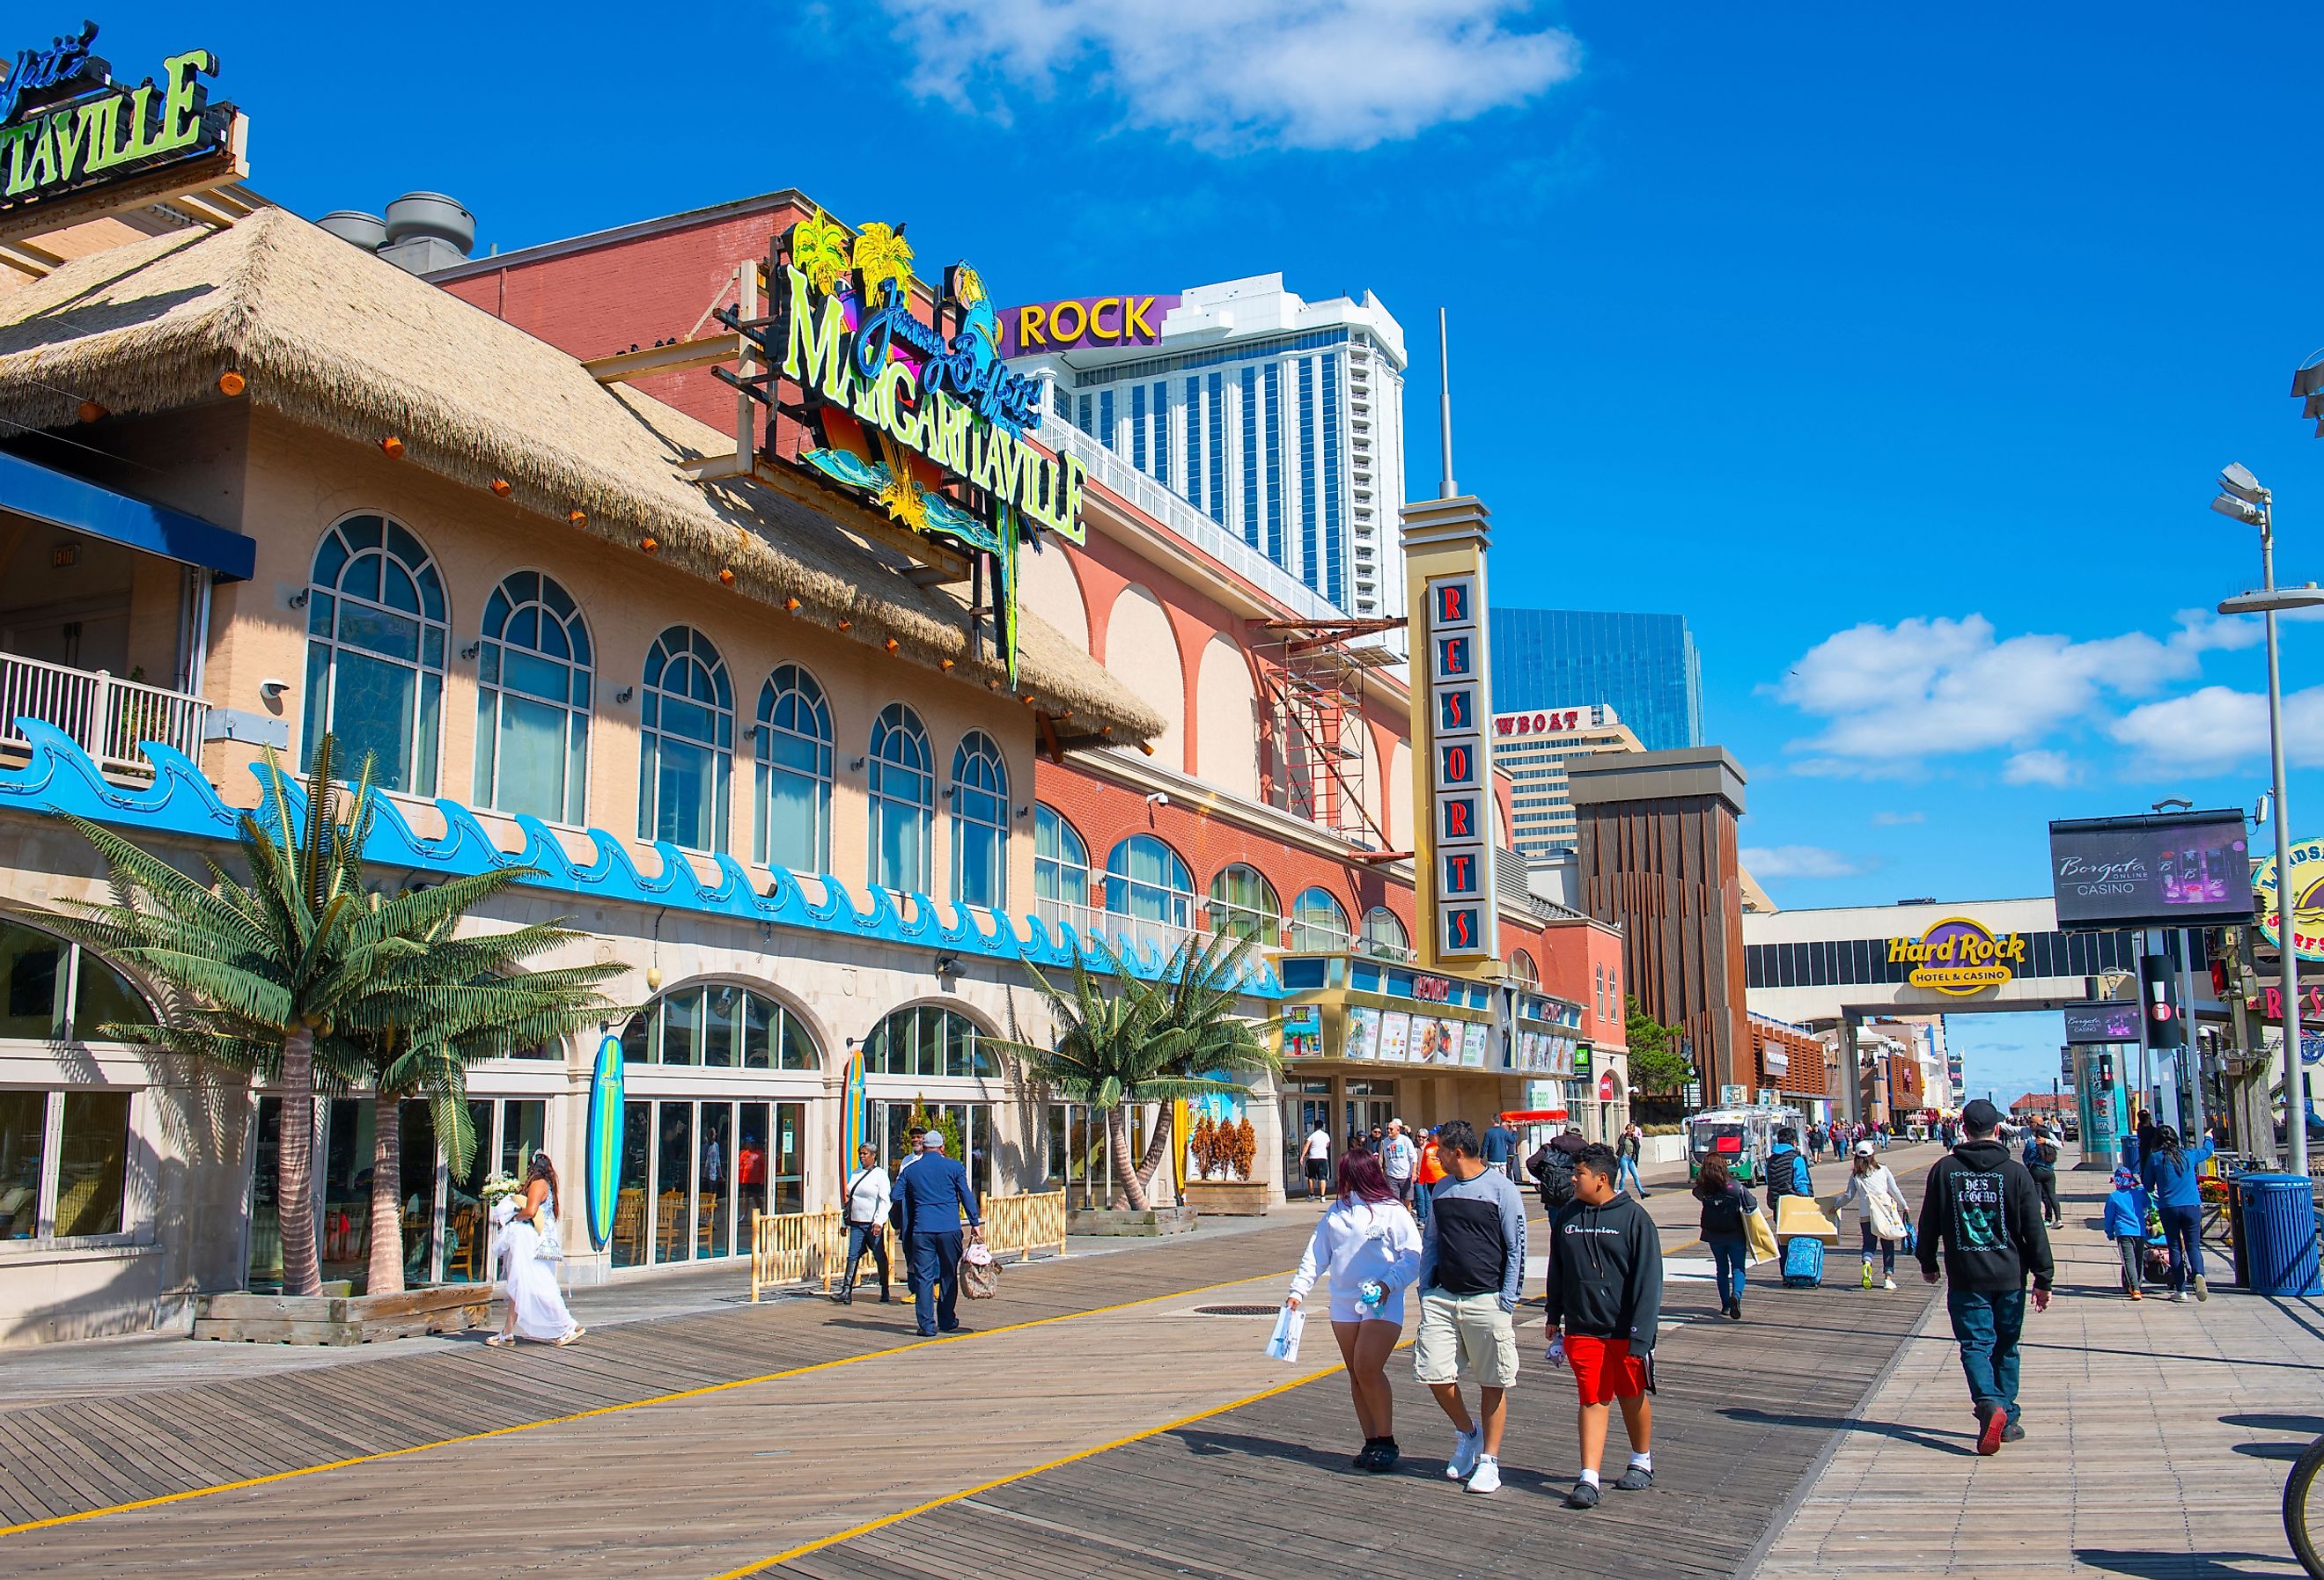 Resorts Casino Hotel in Atlantic City, New Jersey. Image credit Wangkun Jia via Shutterstock